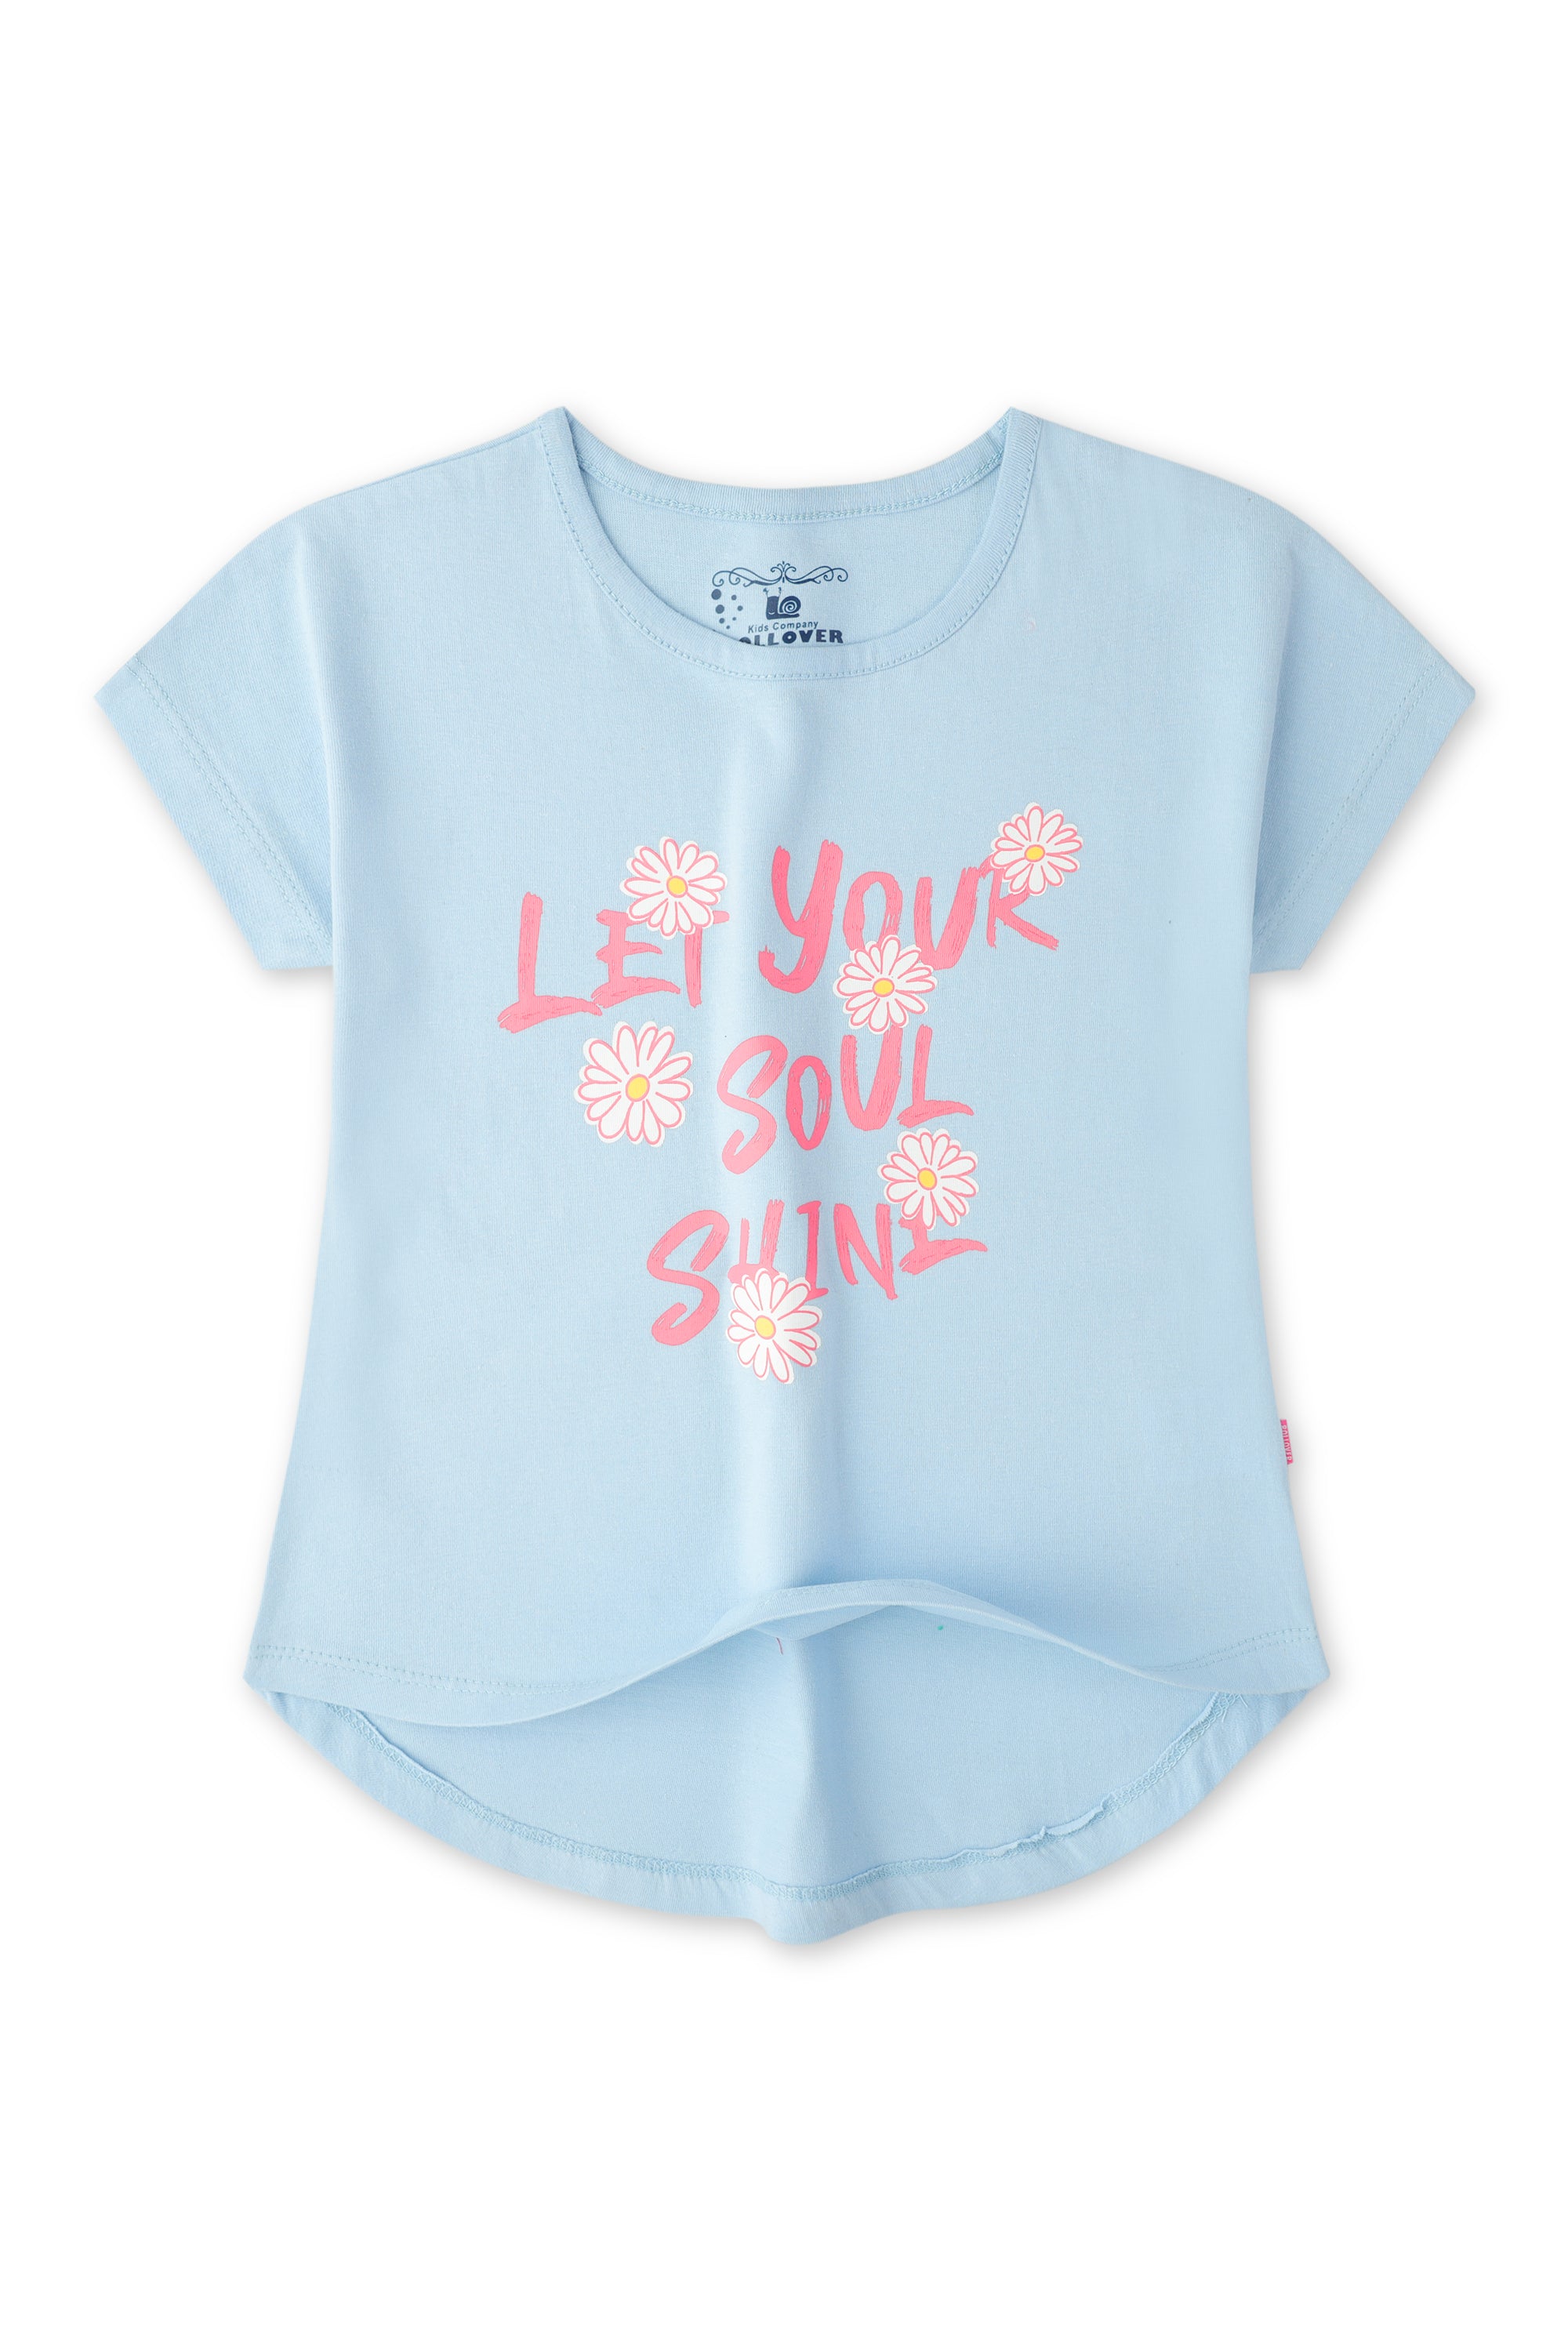 Let Your Soul Shine' Girls T-shirt